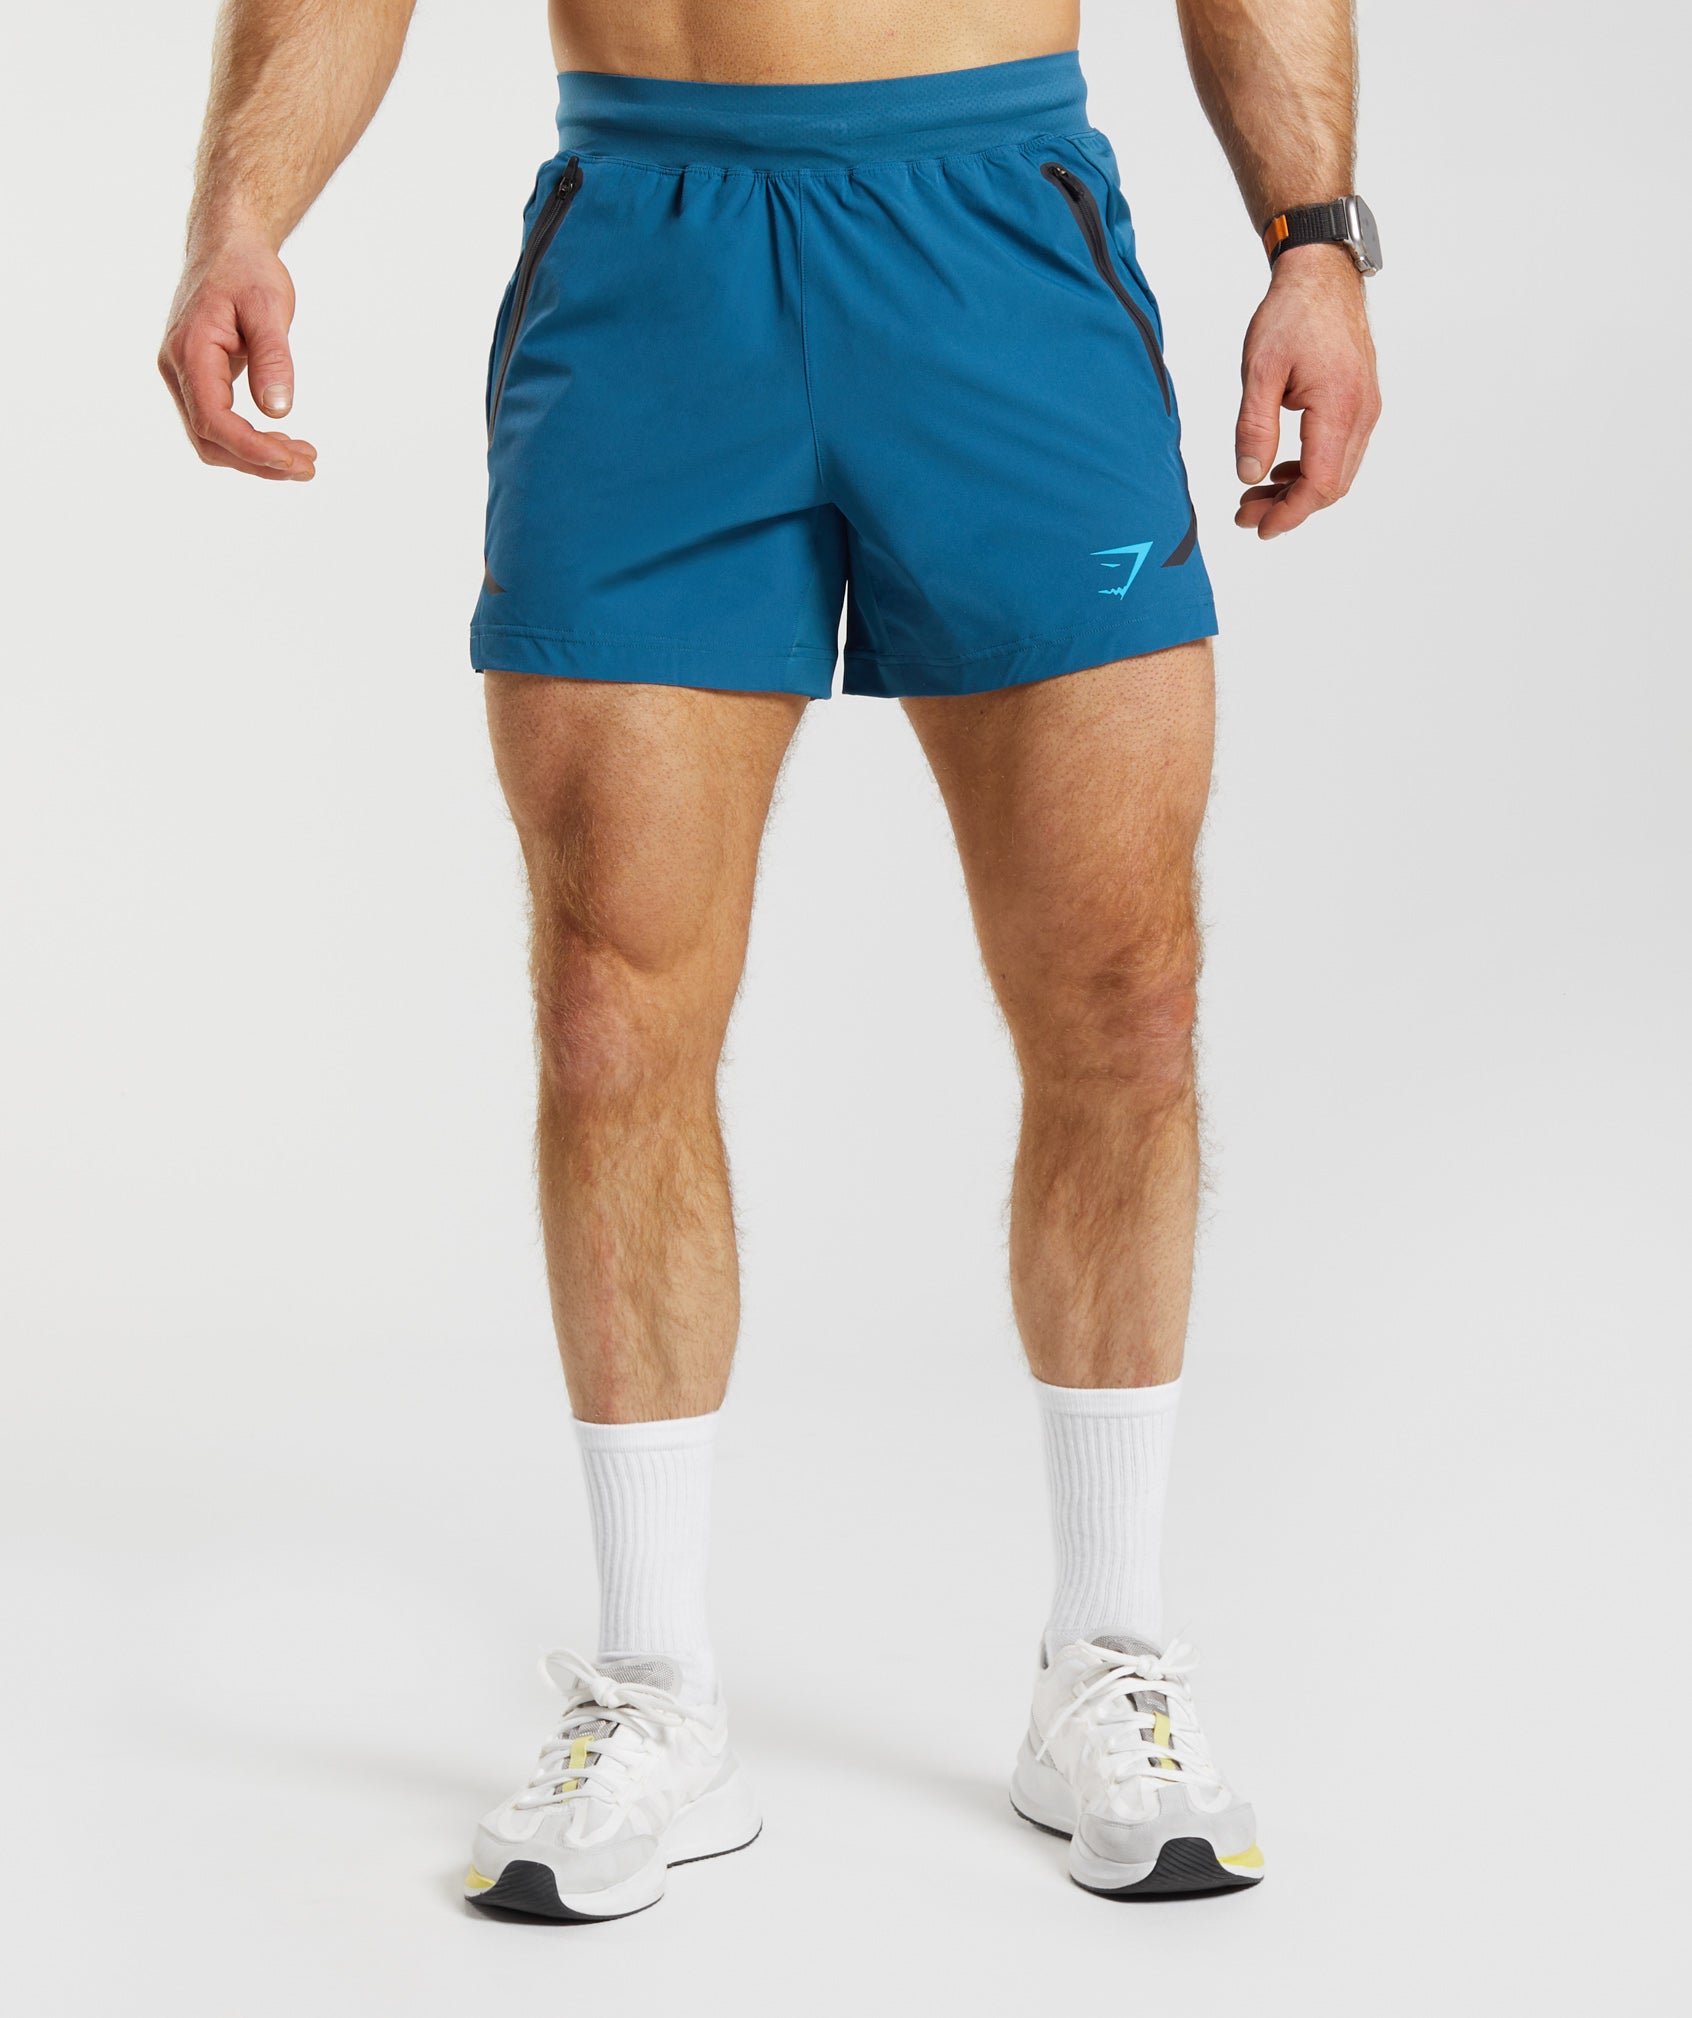 Men's Grey Gym & Workout Shorts - Gymshark